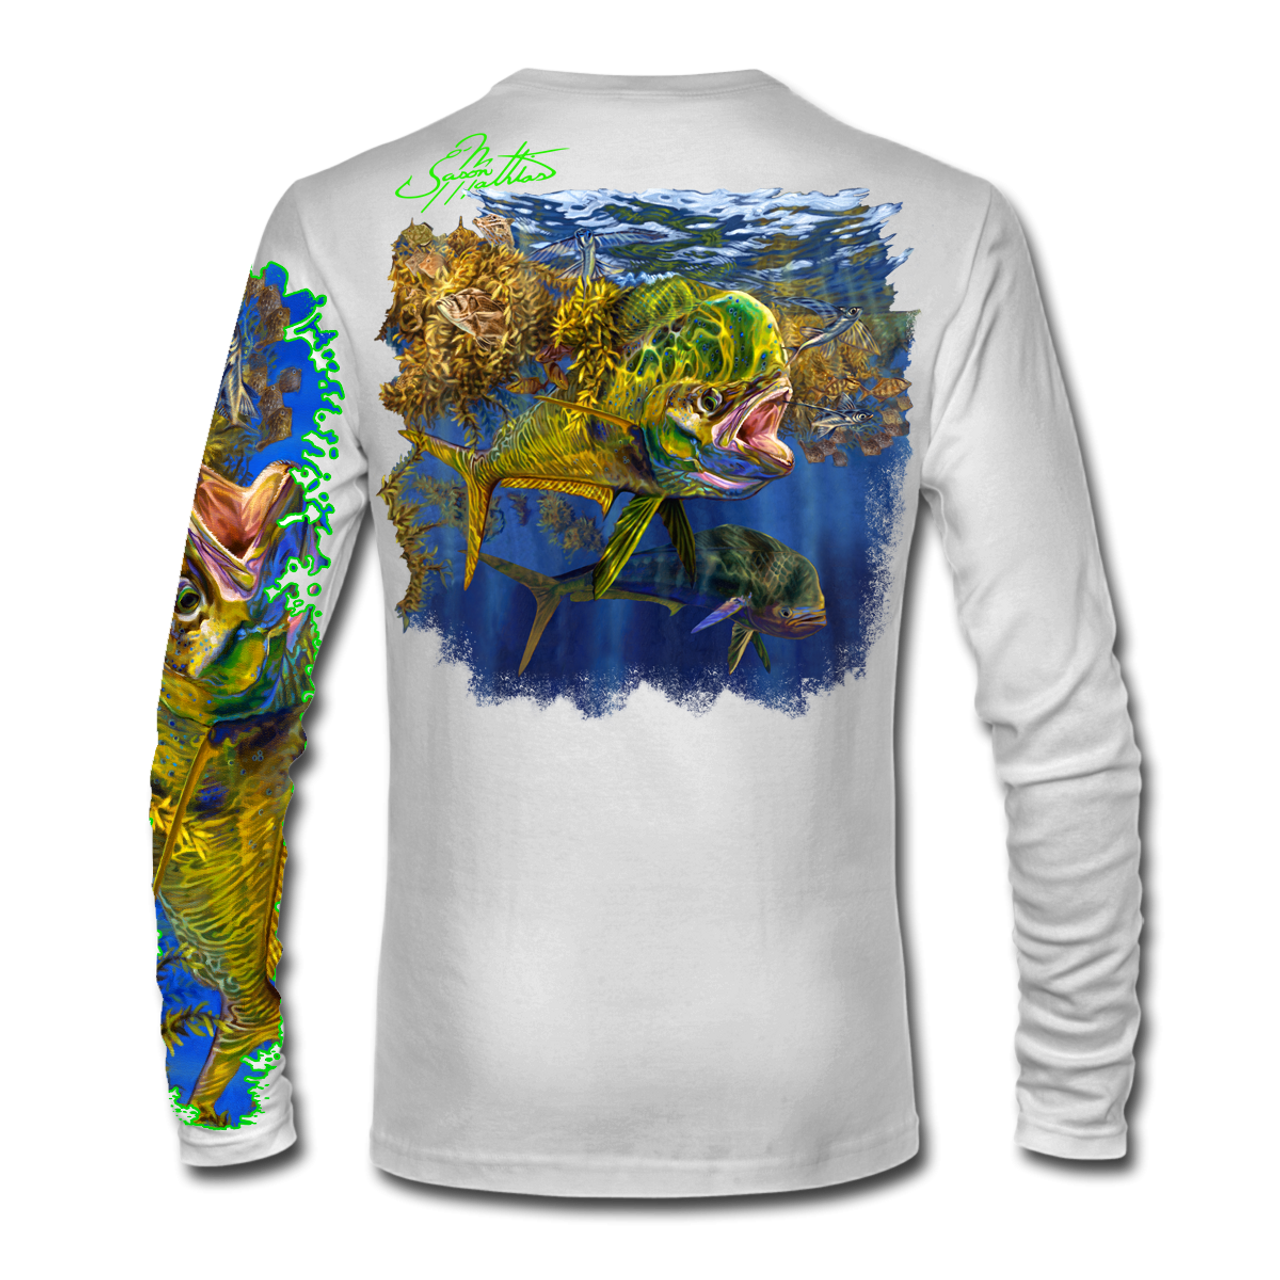 Youth LS High Performance tee shirt (Hogfish Dive) - Jason Mathias